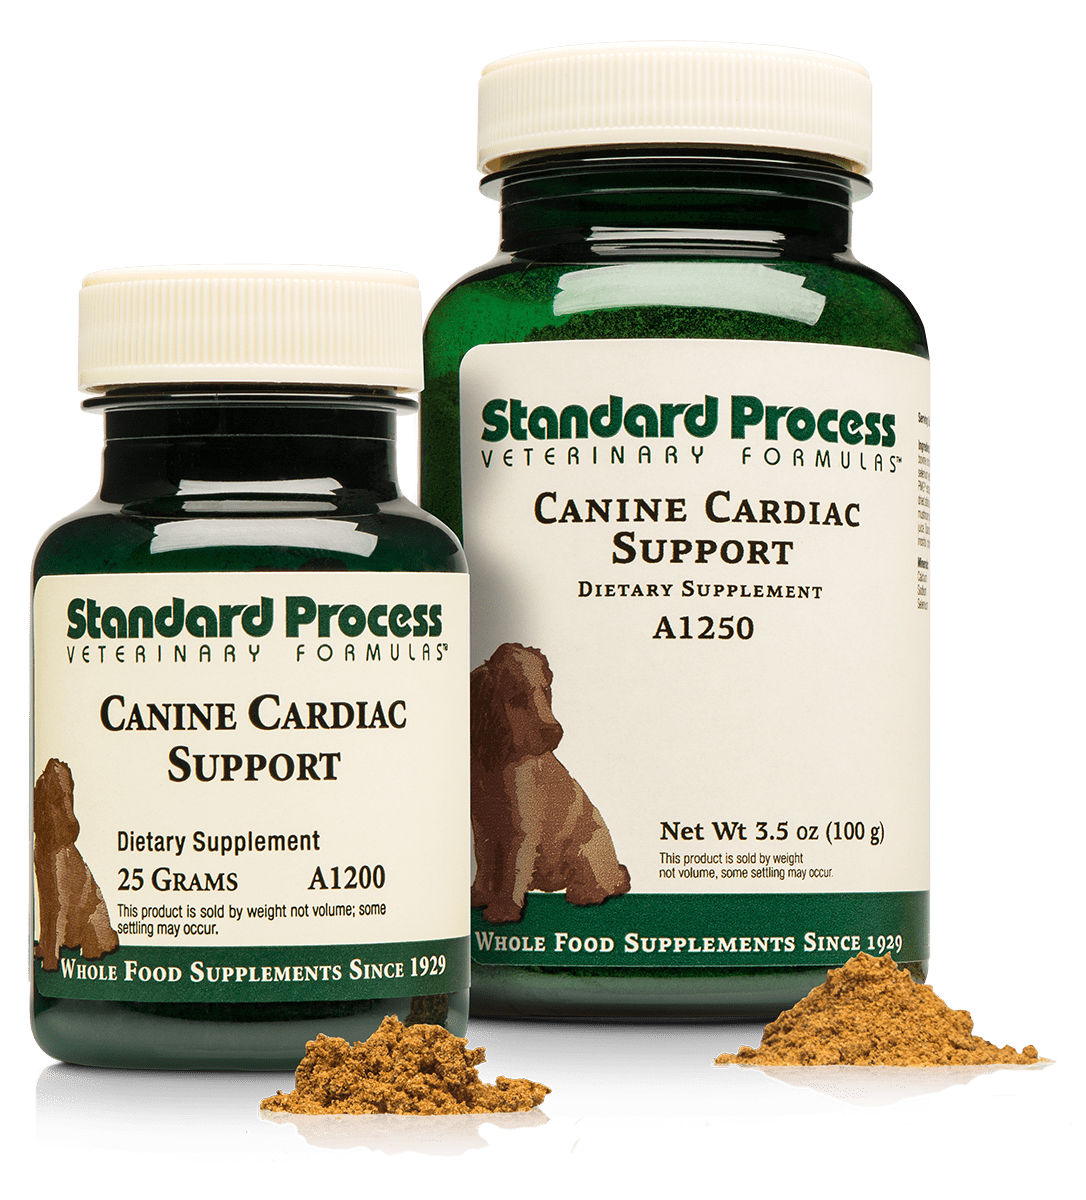 Standard Process Canine Cardiac Support 100g powder